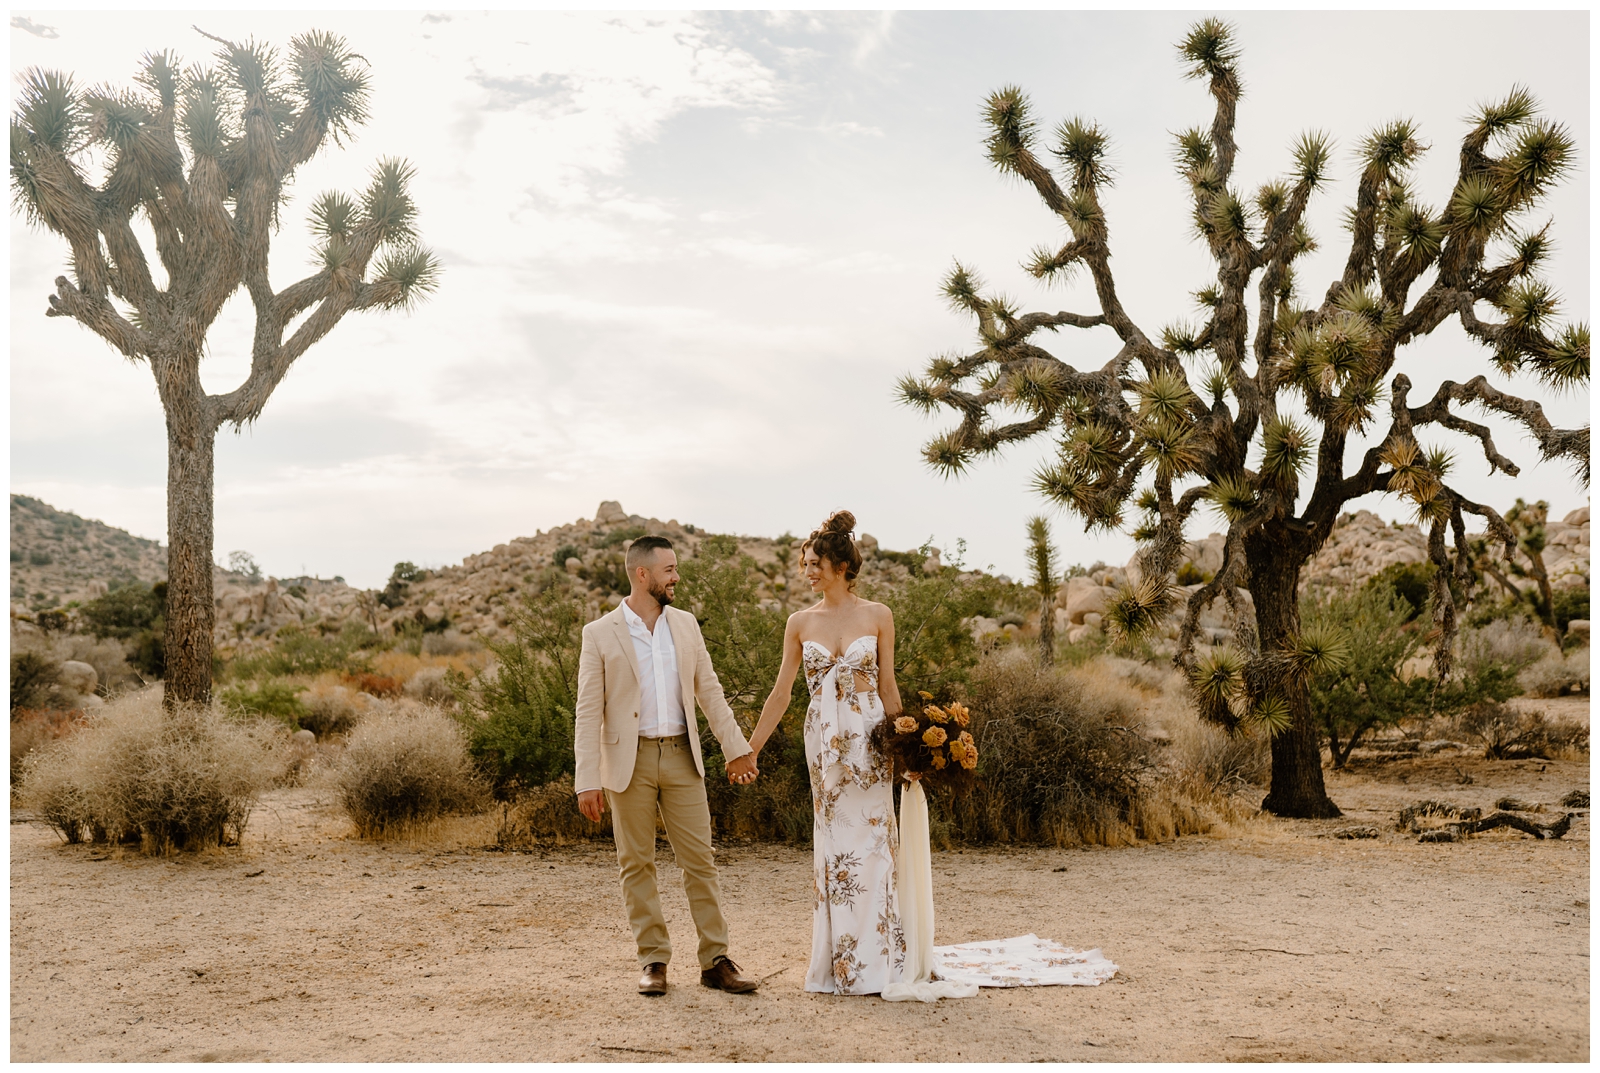 Indie Chic elopement in Joshua Tree, California by adventurous wedding photographer Kayli LaFon Photography